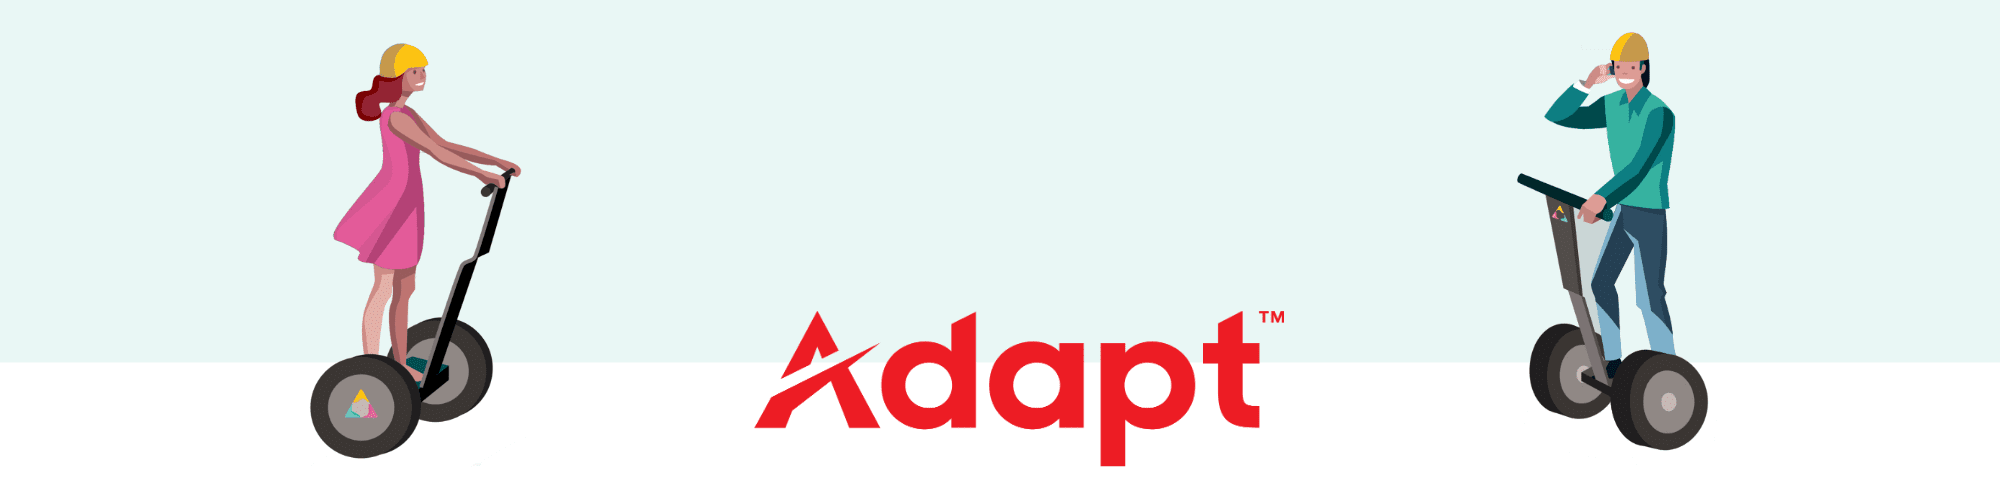 adapt-crm-hack-banner